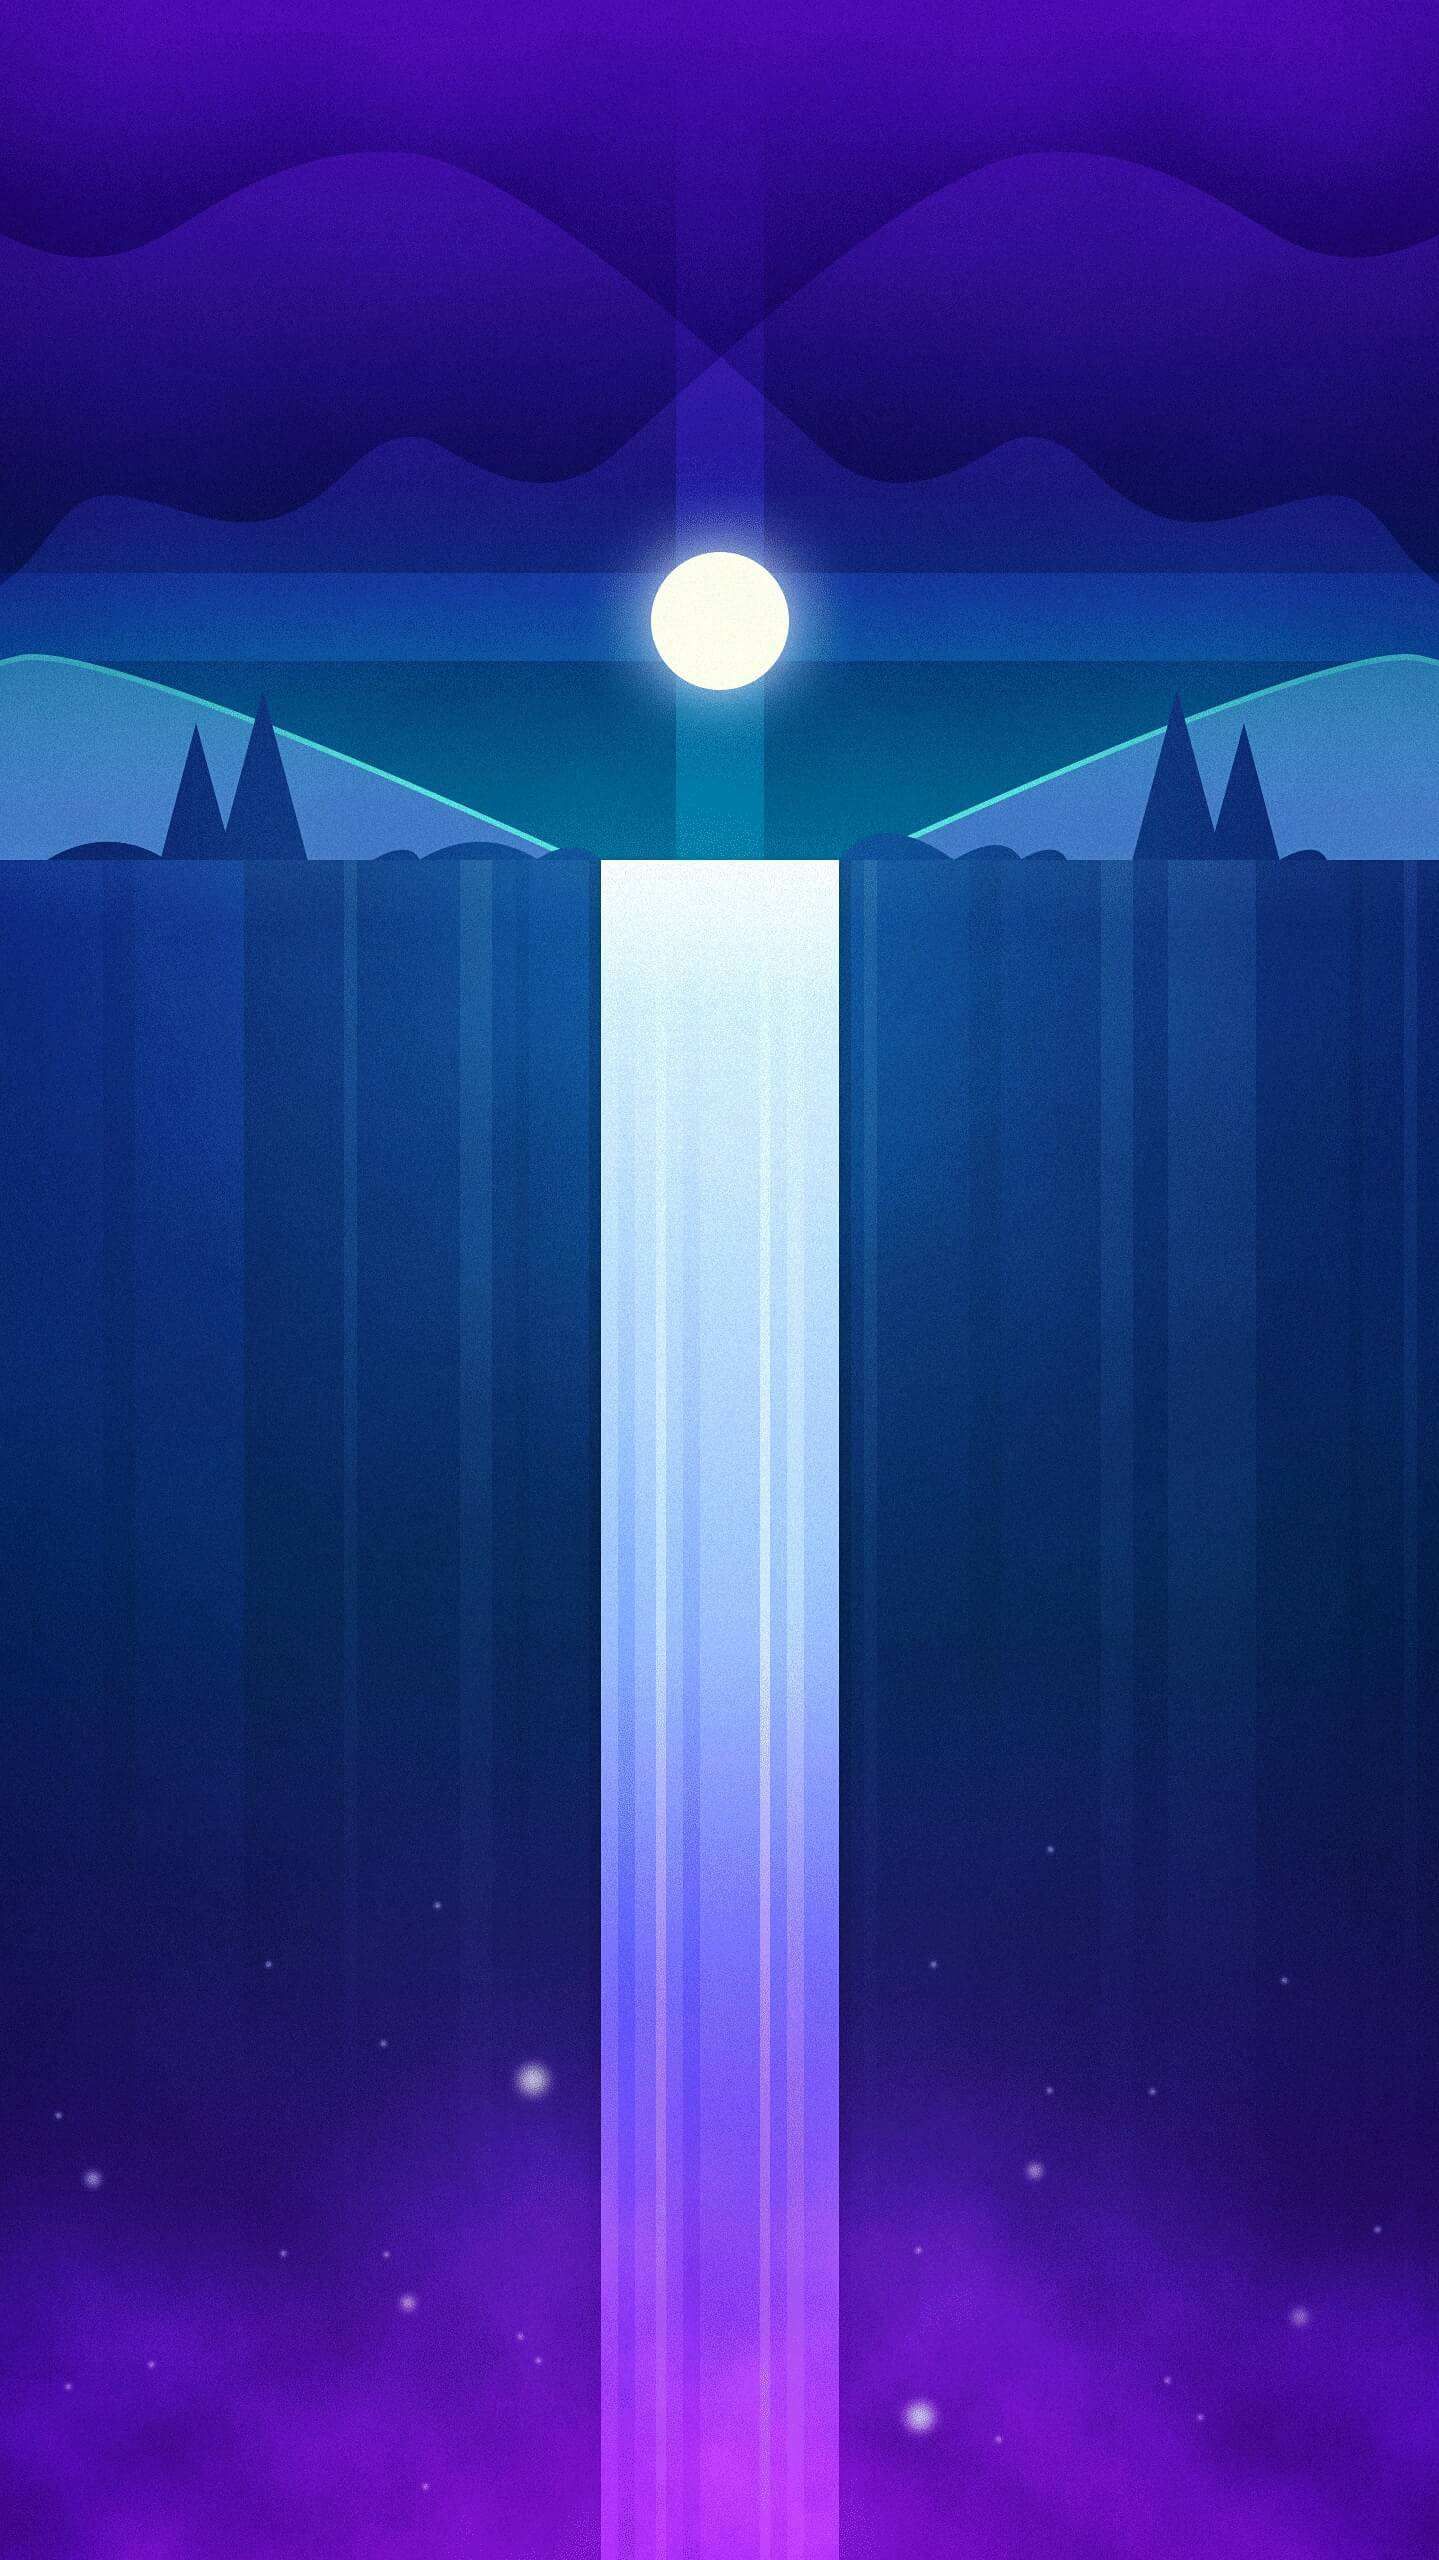 Sky Waterfall iPhone Wallpaper. Mkbhd wallpaper, iPhone